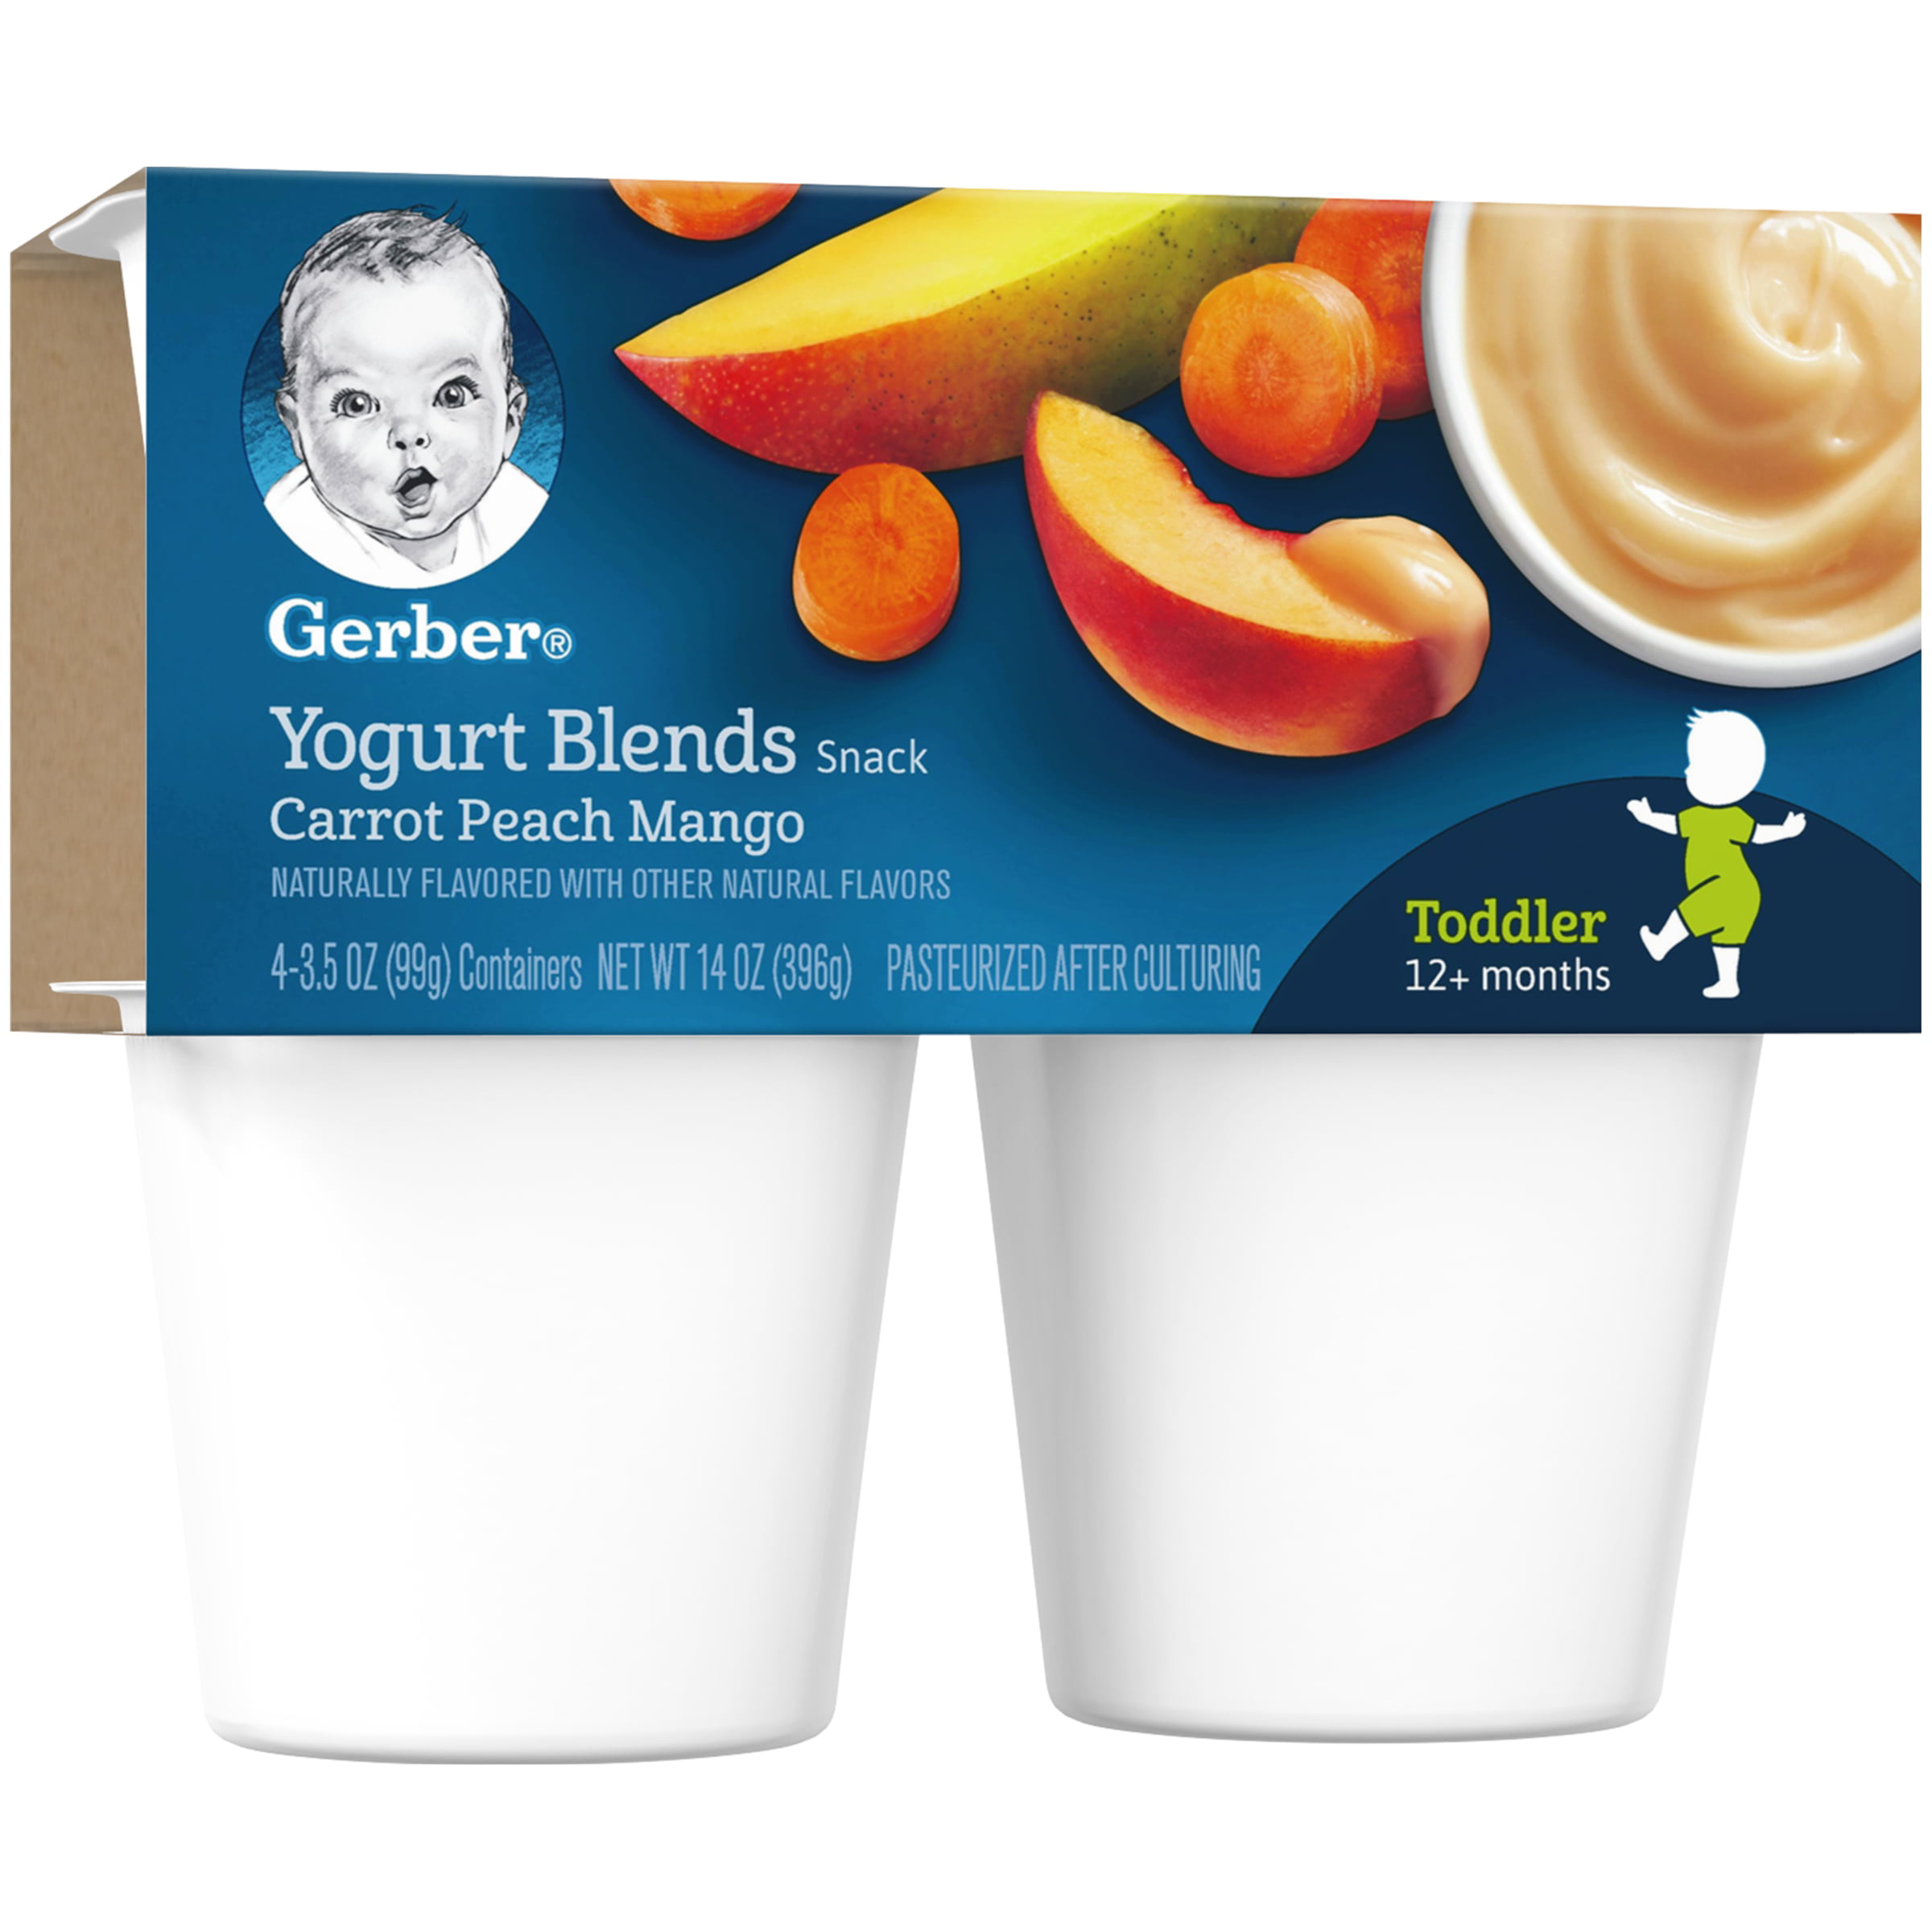 gerber yogurt blends snack